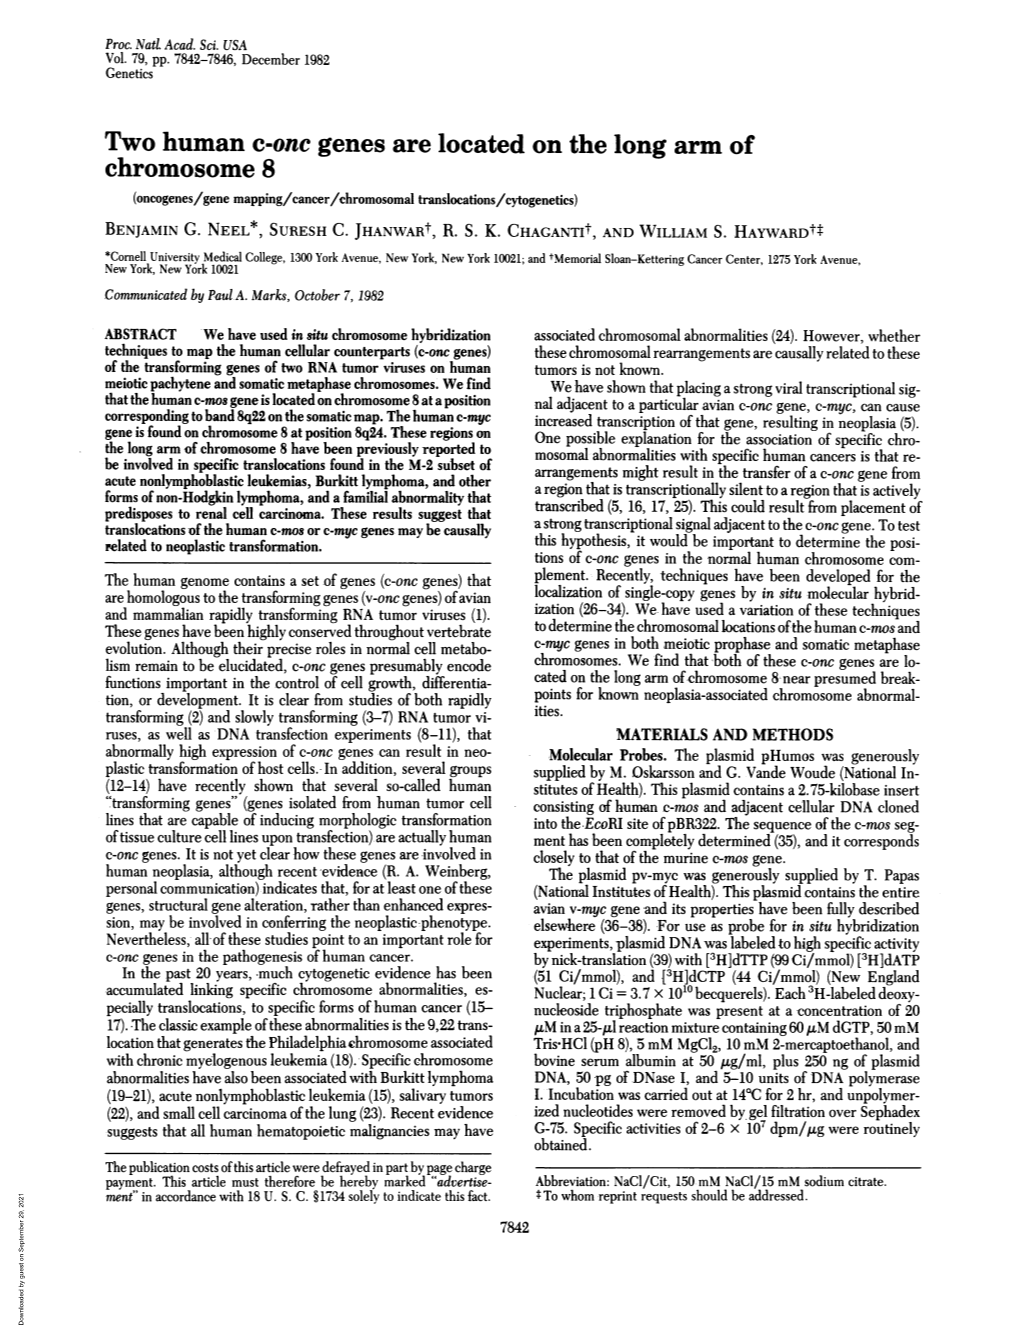 Chromosome 8 (Oncogenes/Gene Mapping/Cancer/Chromosomal Translocations/Cytogenetics) BENJAMIN G